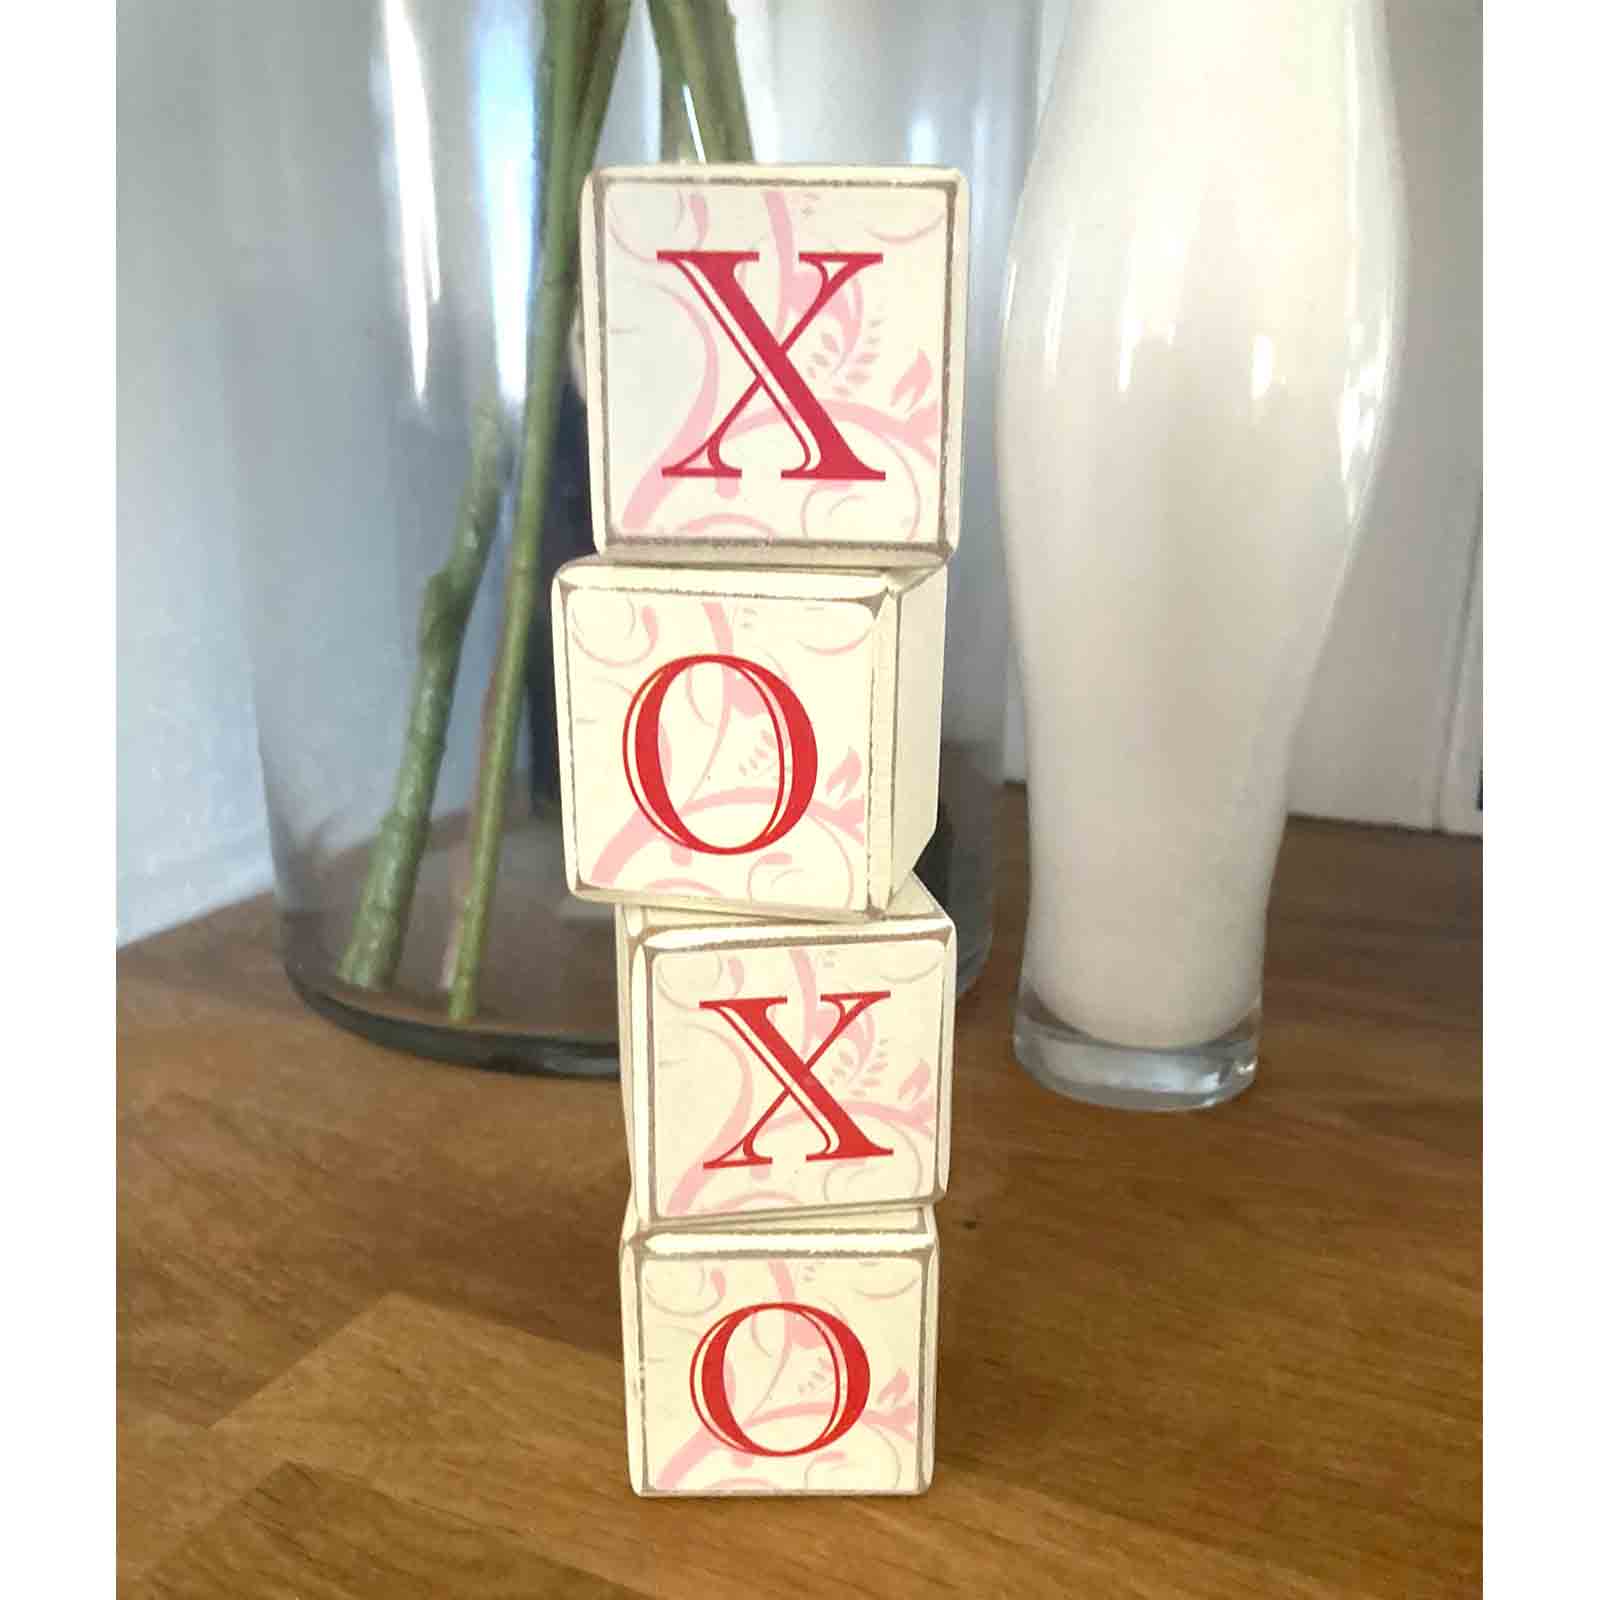 XOXO Wooden Word / Letter Blocks